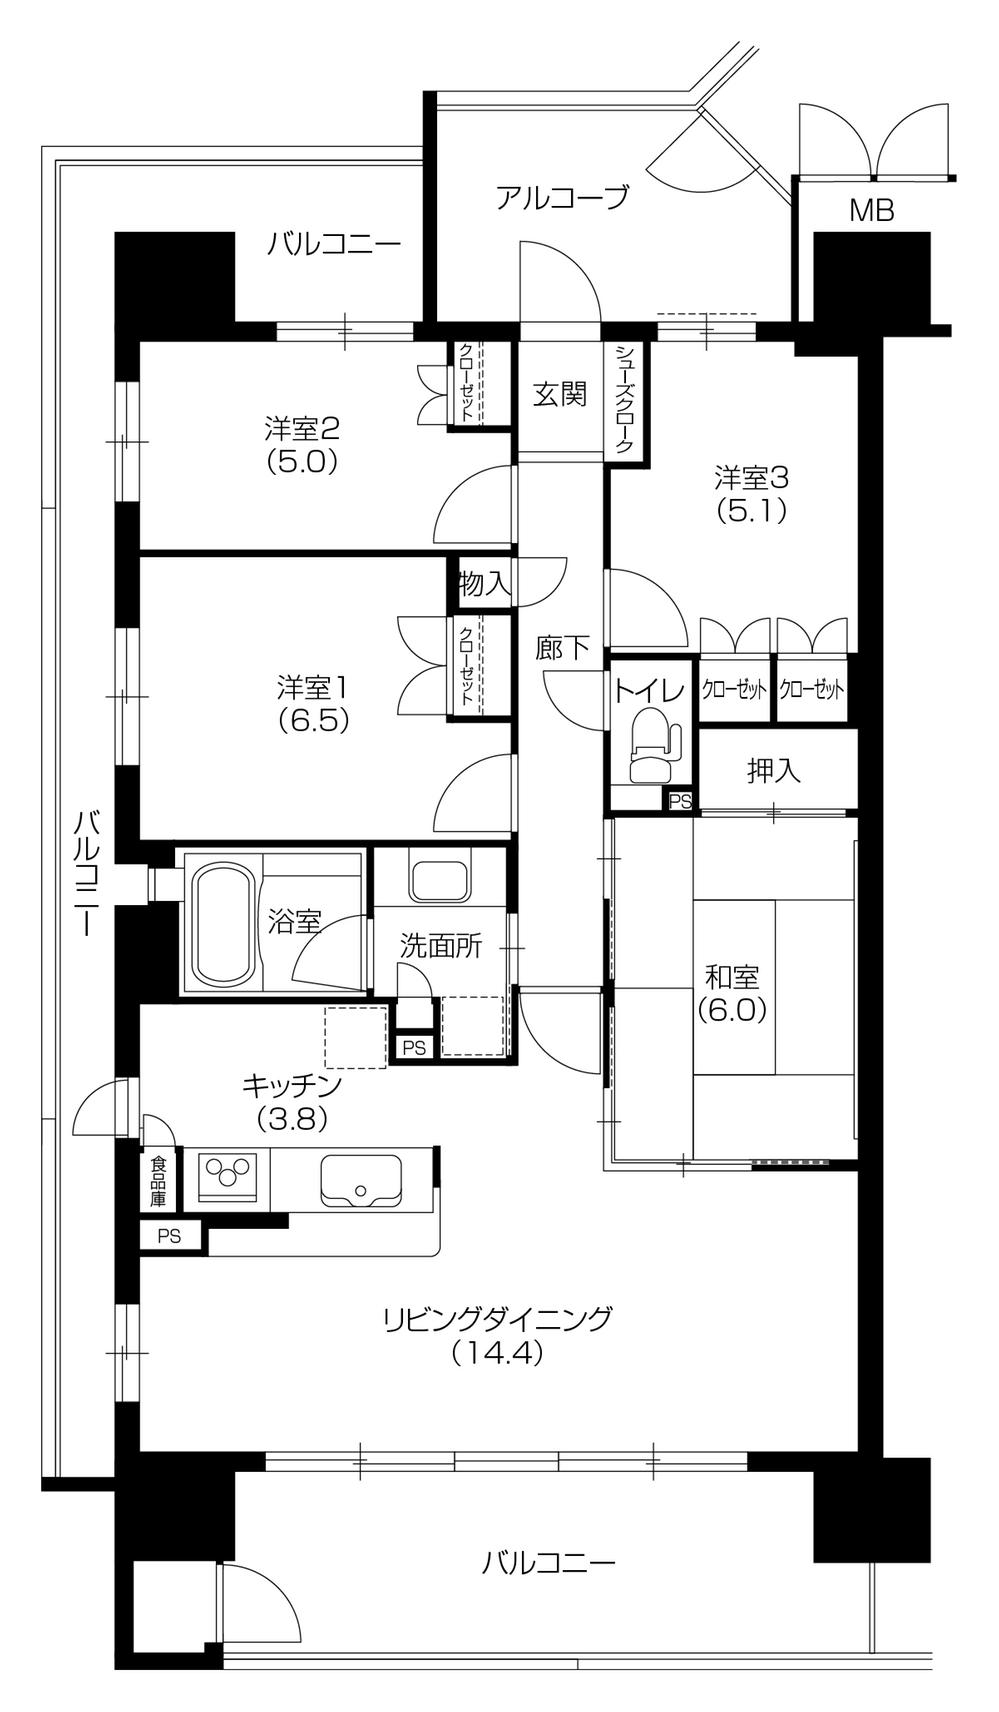 Floor plan. 4LDK, Price 28,300,000 yen, Footprint 89 sq m , Balcony area 22.32 sq m